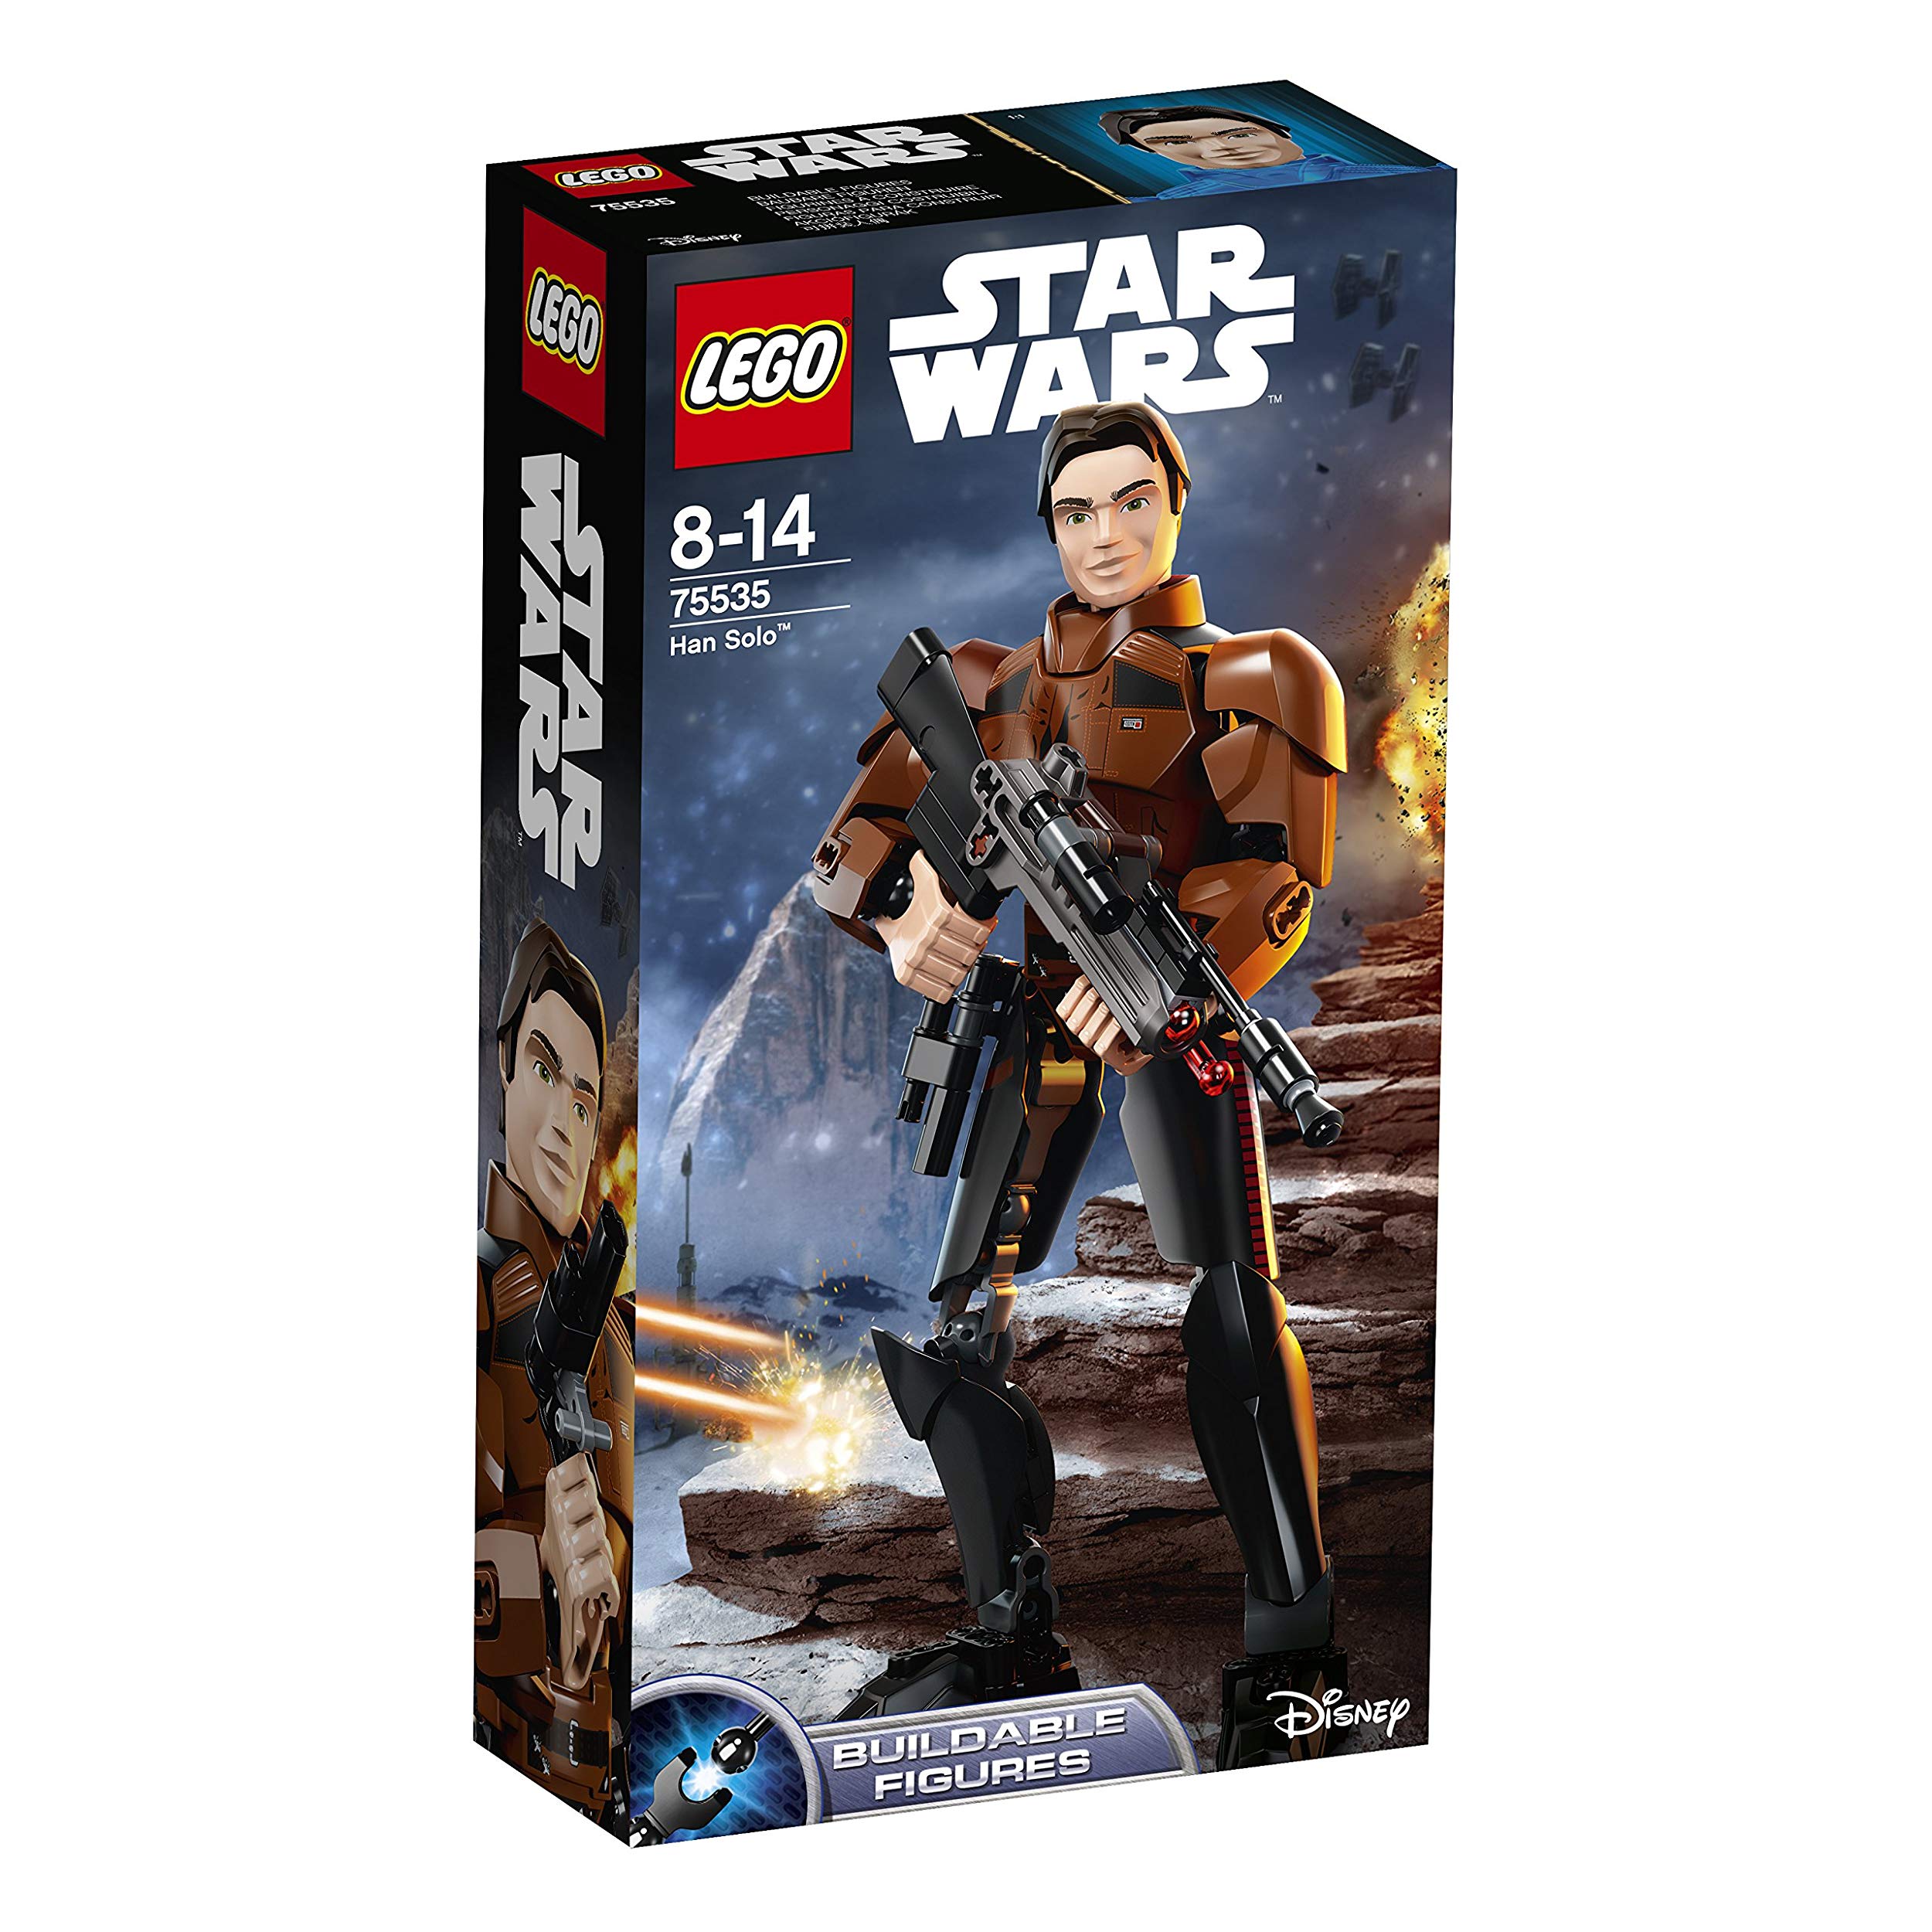 Lego Star Wars Han Solo Building Bare Figure